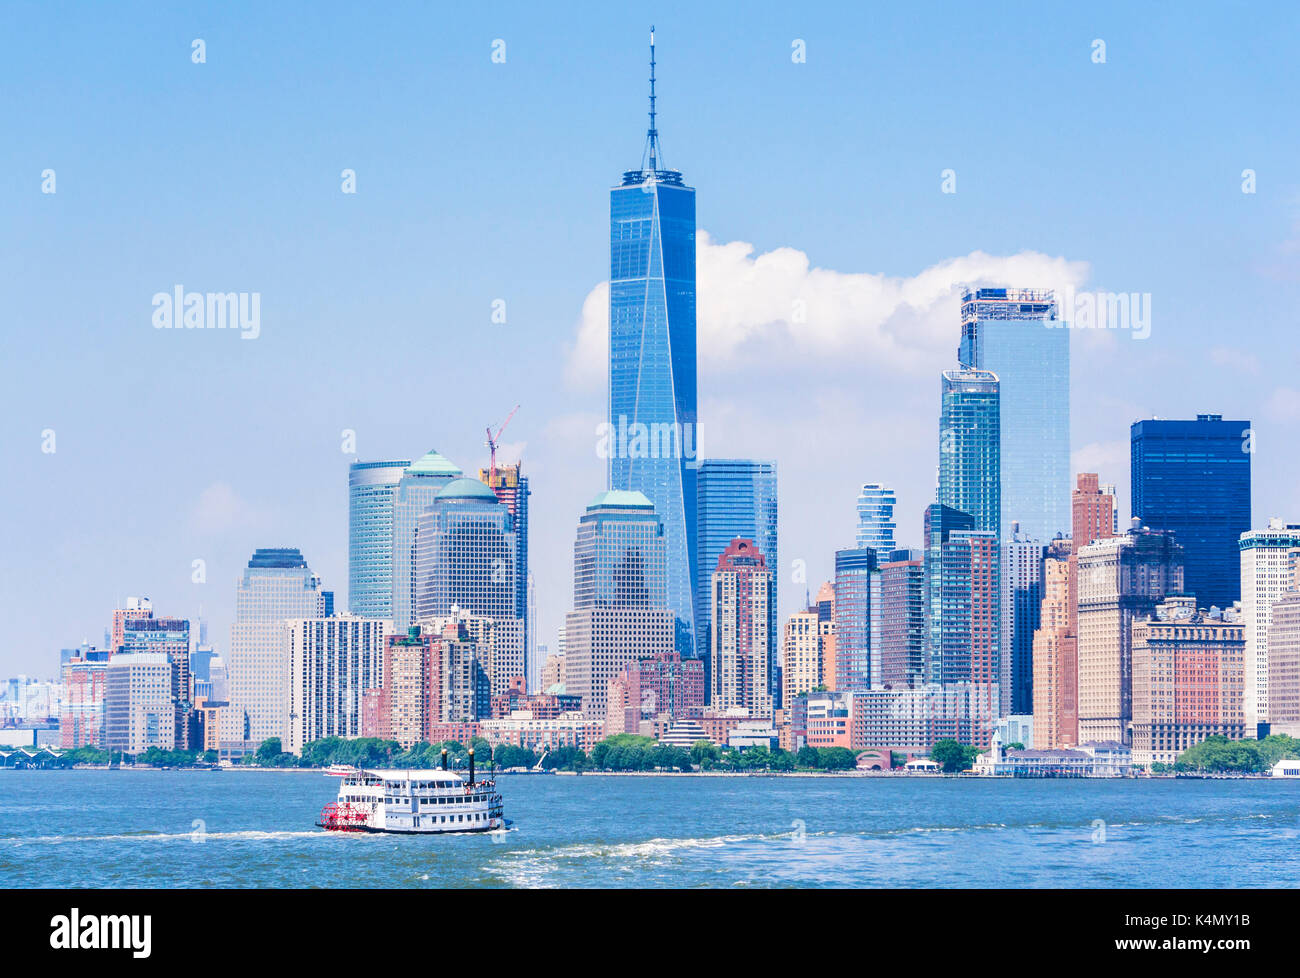 Lower Manhattan skyline, New York skyline, One World Trade Center tower, tour boat, Hudson River, New York, United States of America, North America Stock Photo